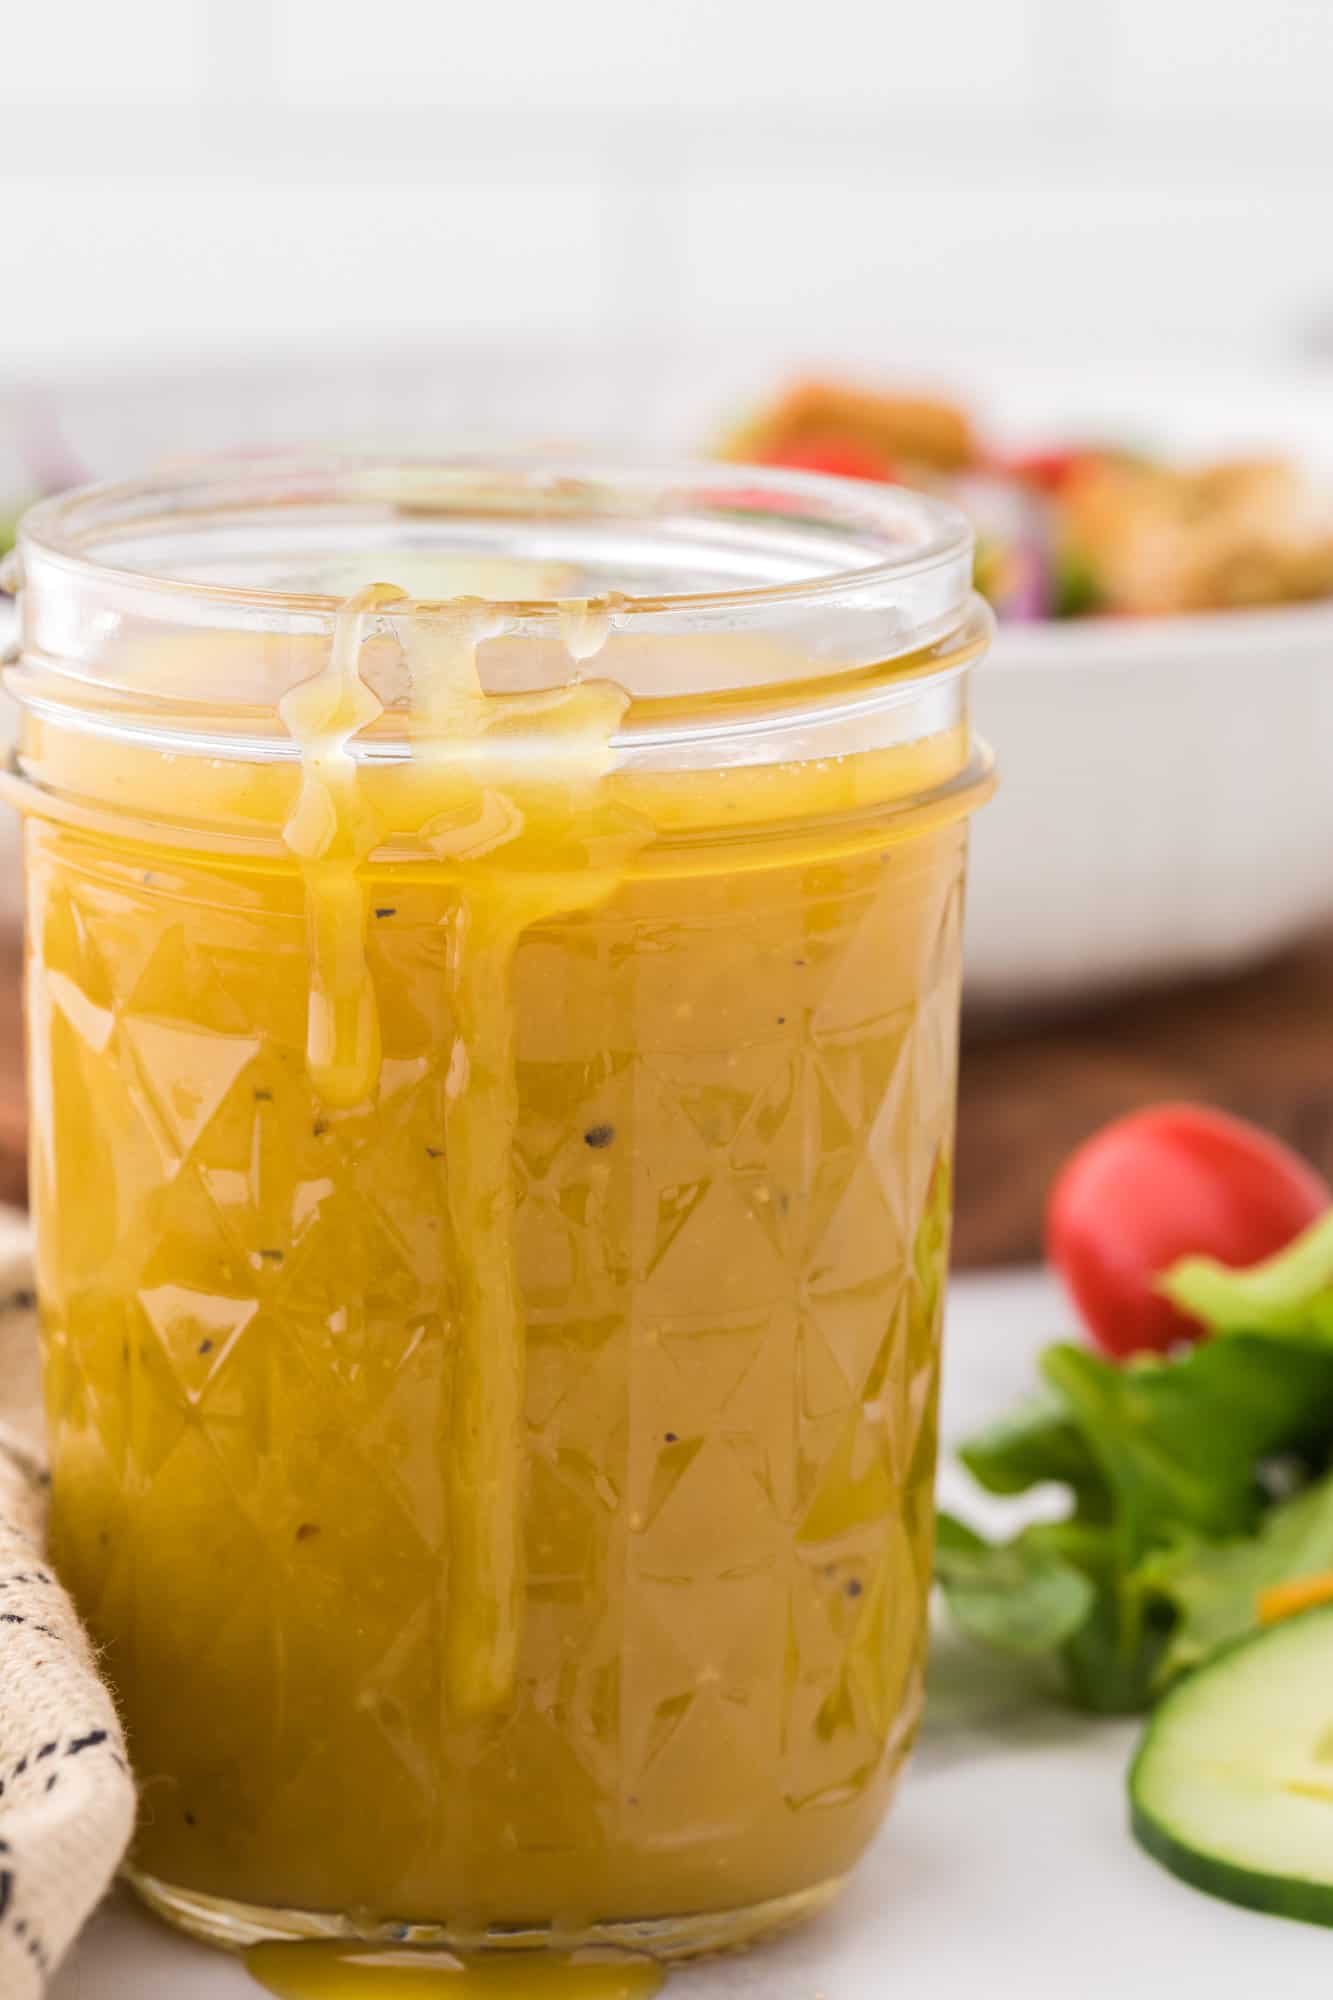 Honey mustard vinaigrette dressing dripping down side of jar.